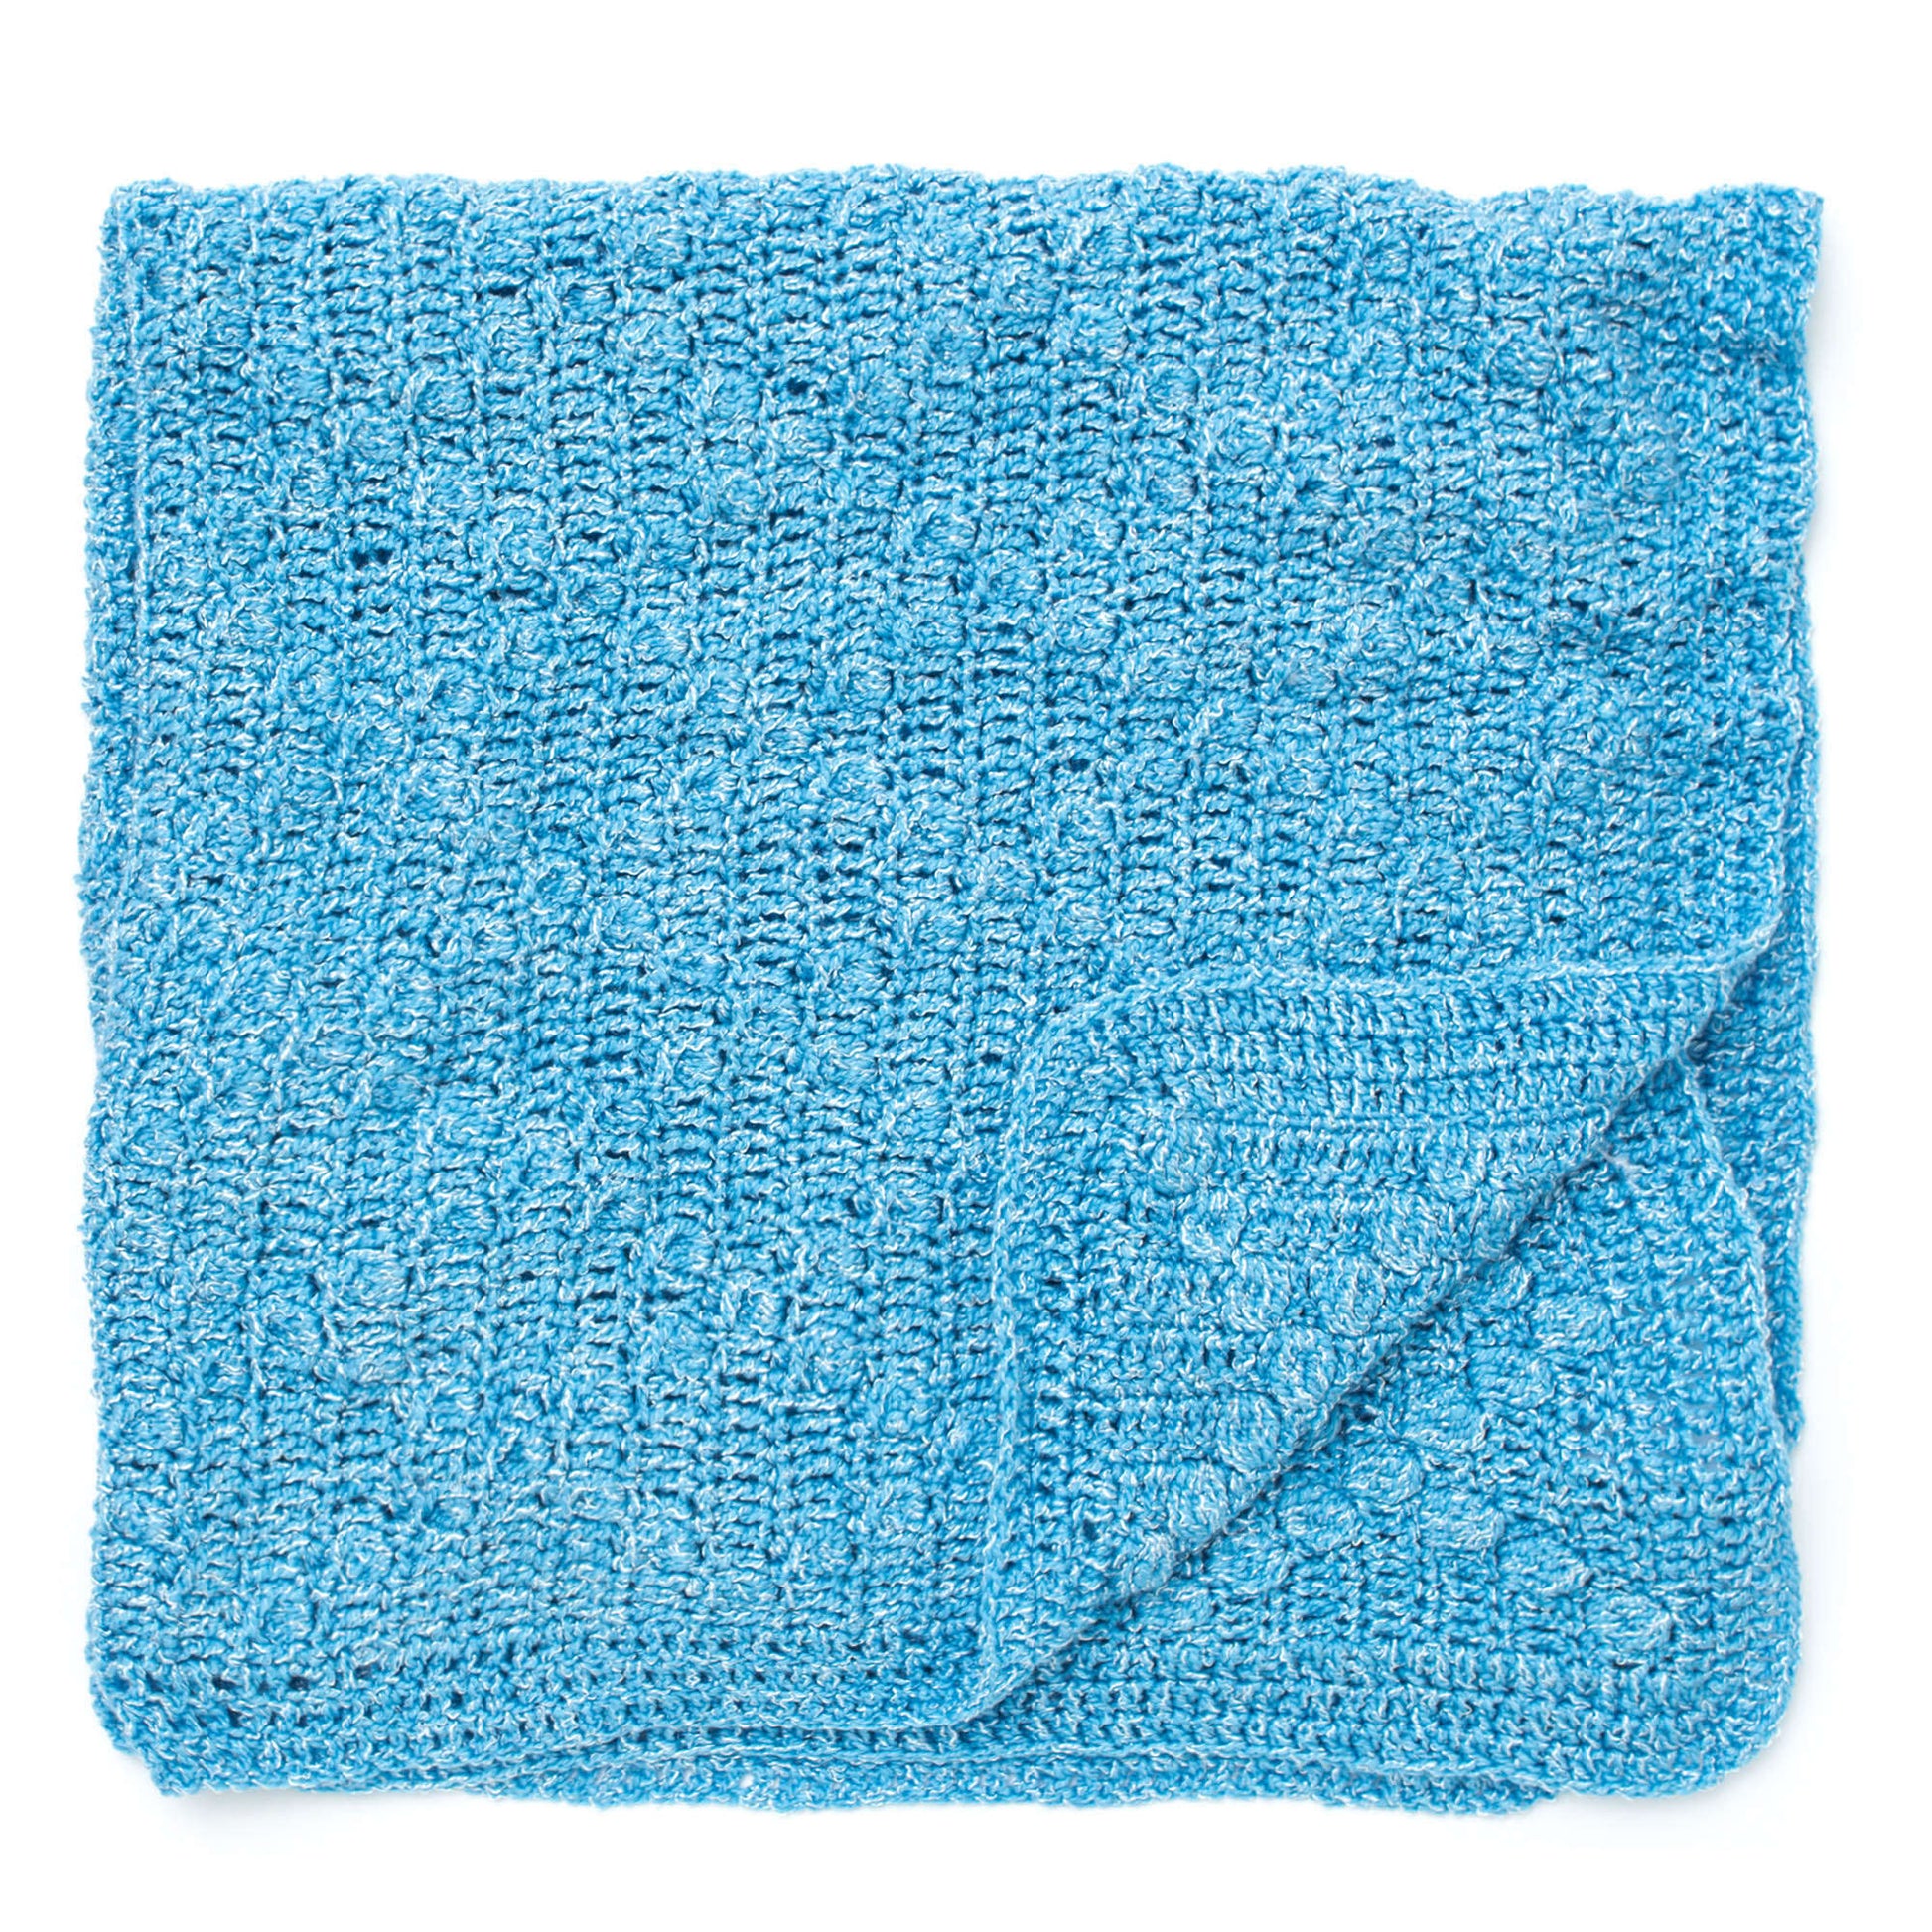 Free Bernat Textured Crochet Blanket Pattern